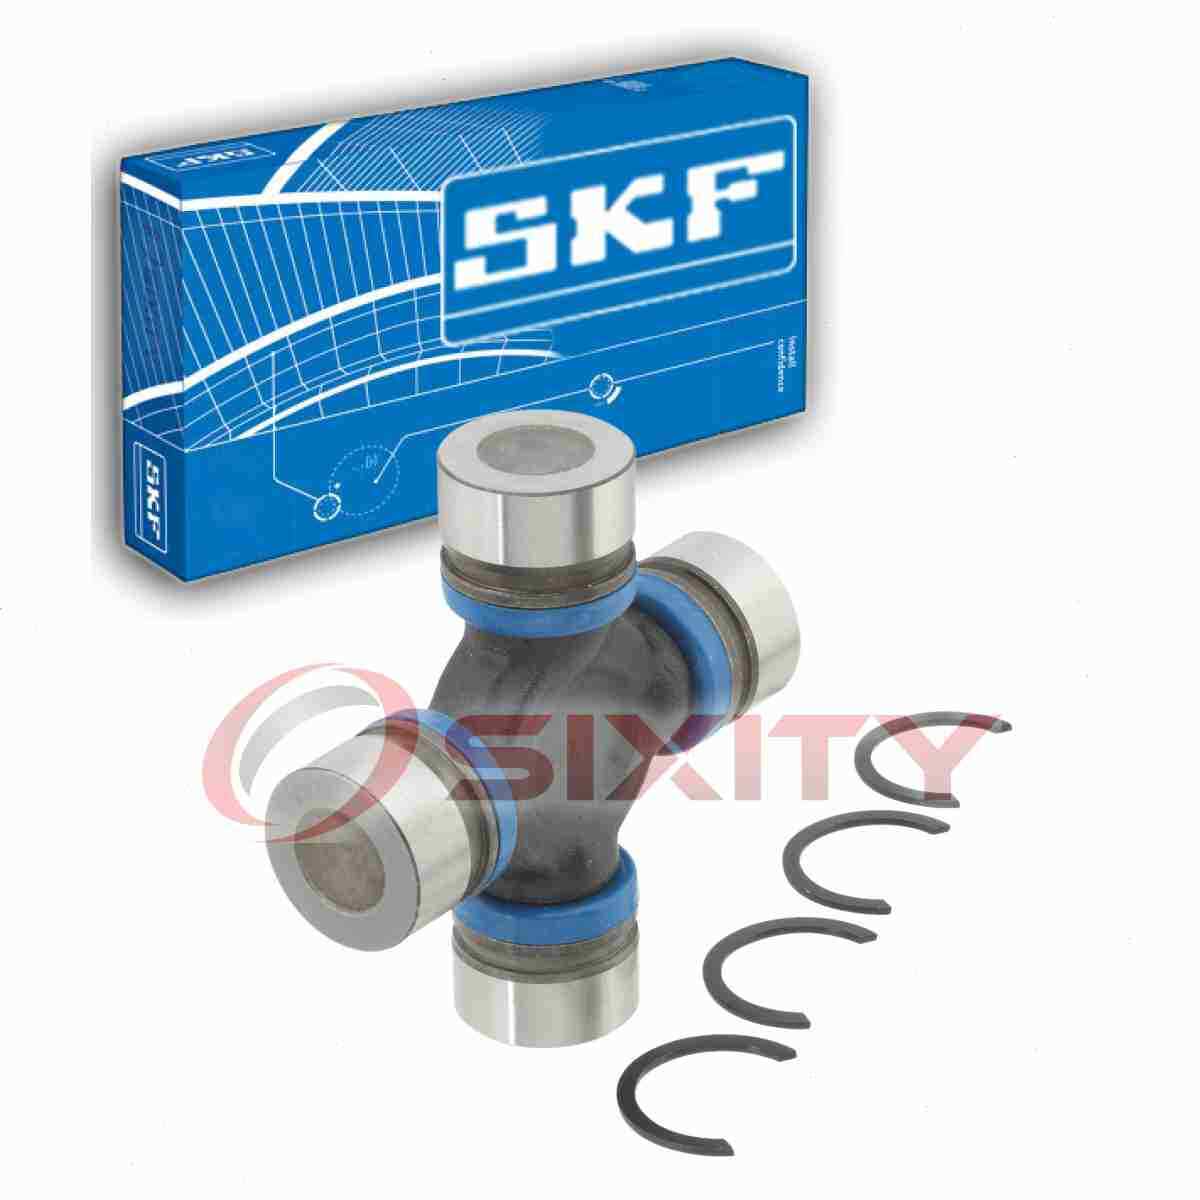 SKF Front Universal Joint for 1975-1980 Oldsmobile Cutlass Salon Driveline ca